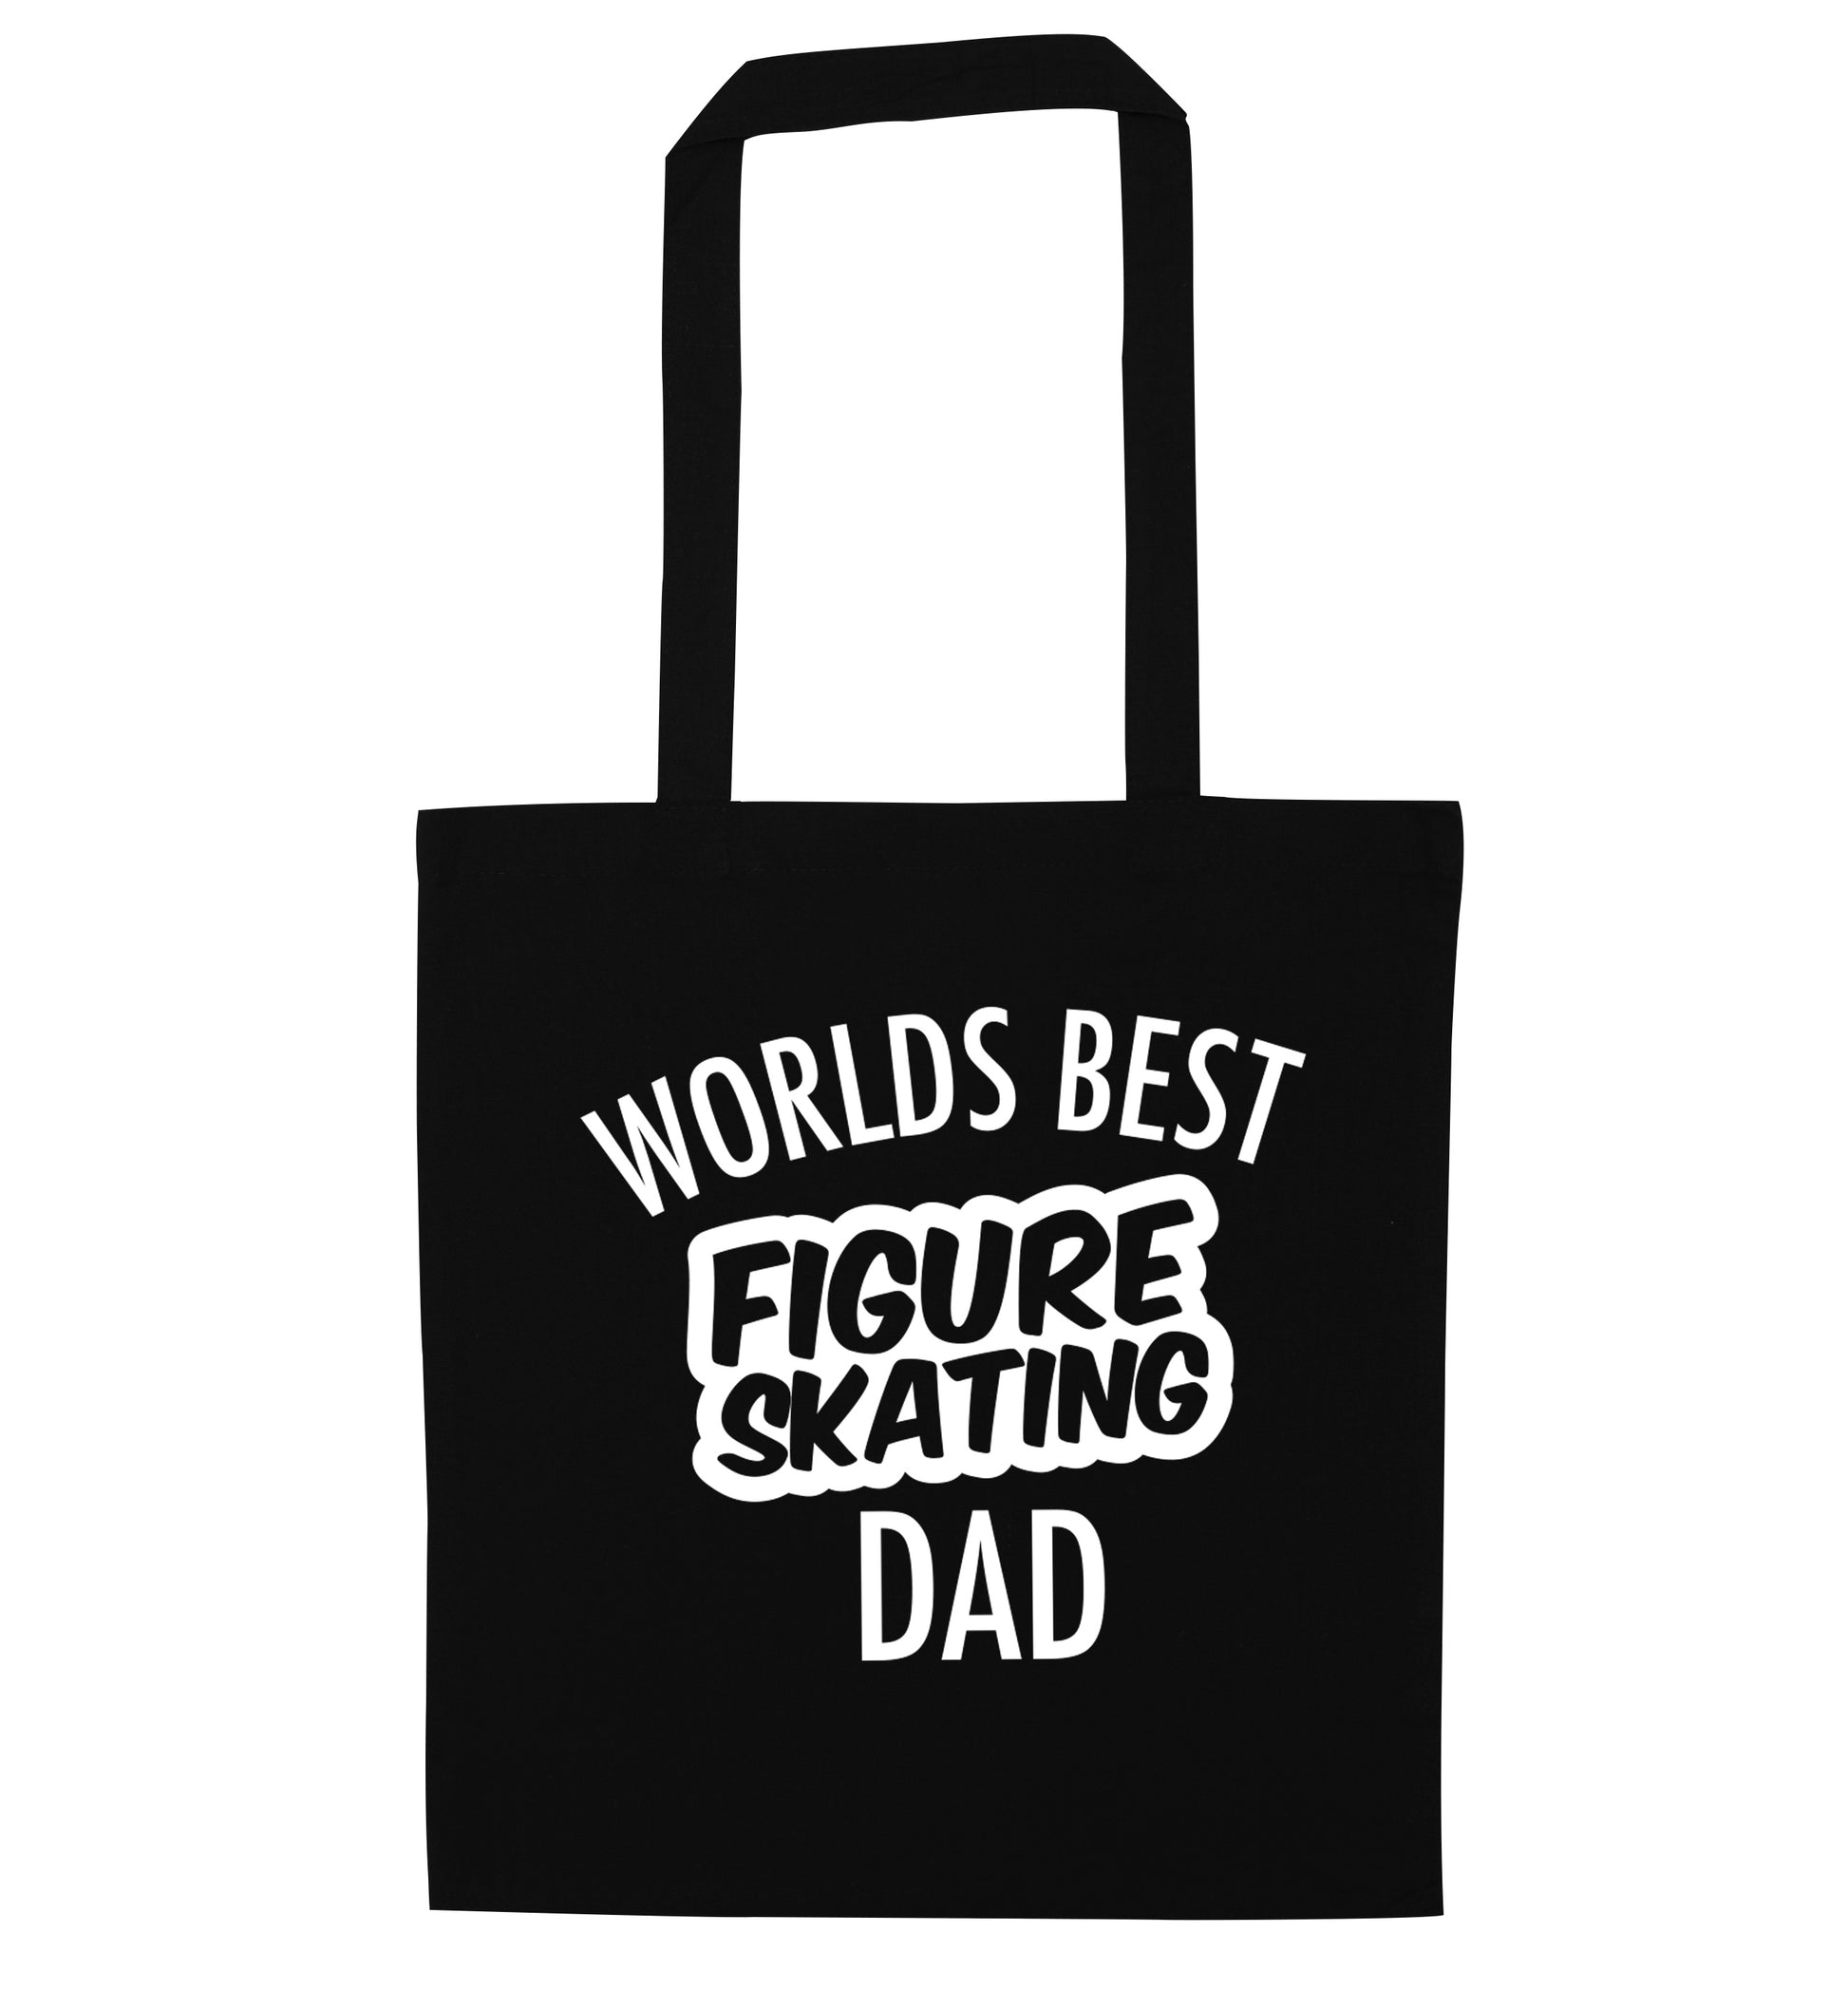 Worlds best figure skating dad black tote bag